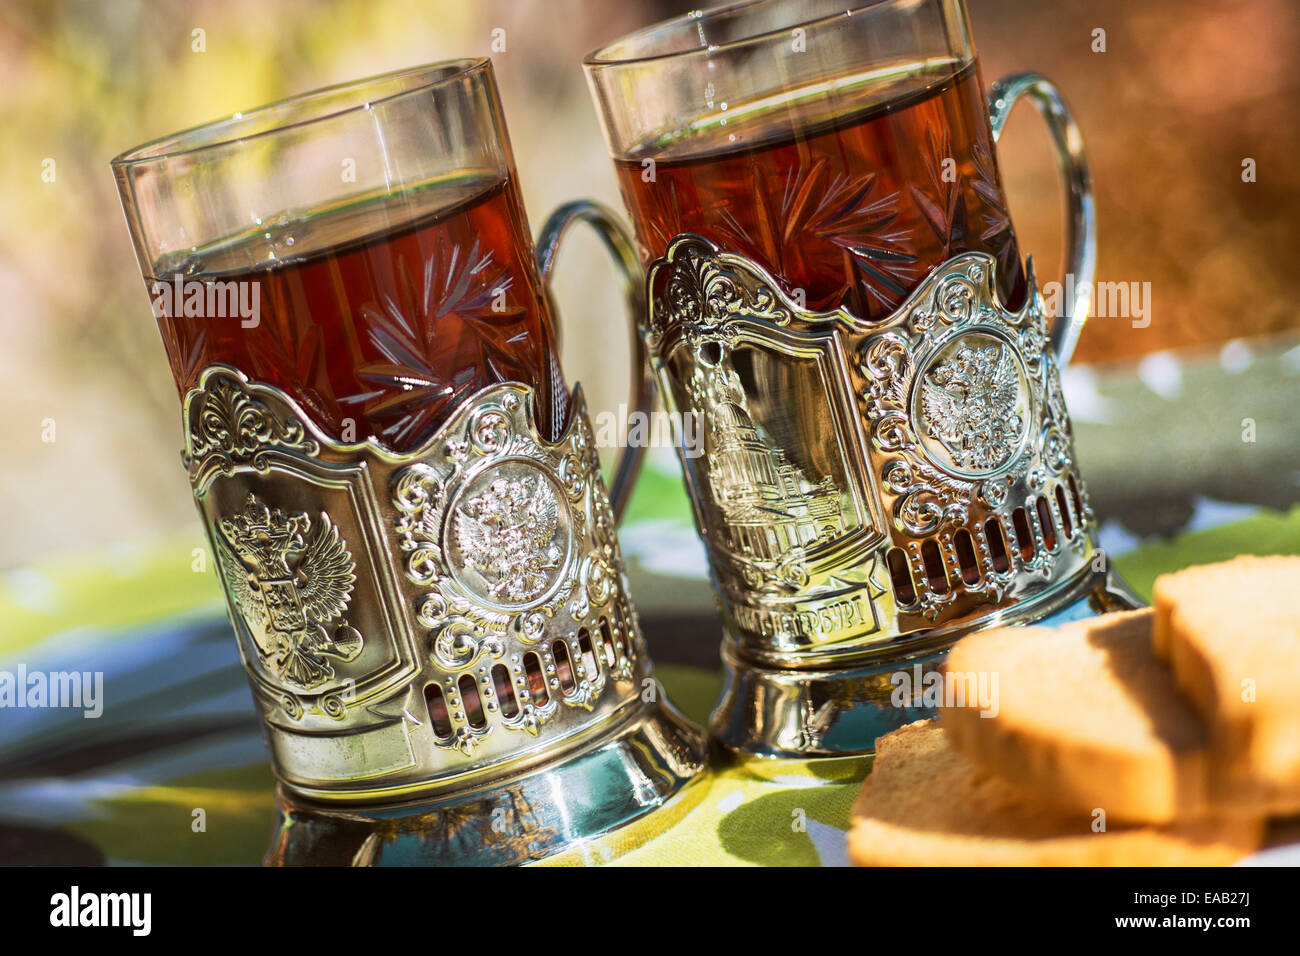 Tea in Glass, Glasses in Traditional Russian Glass Holder Holders, Podstakannik Stock Photo